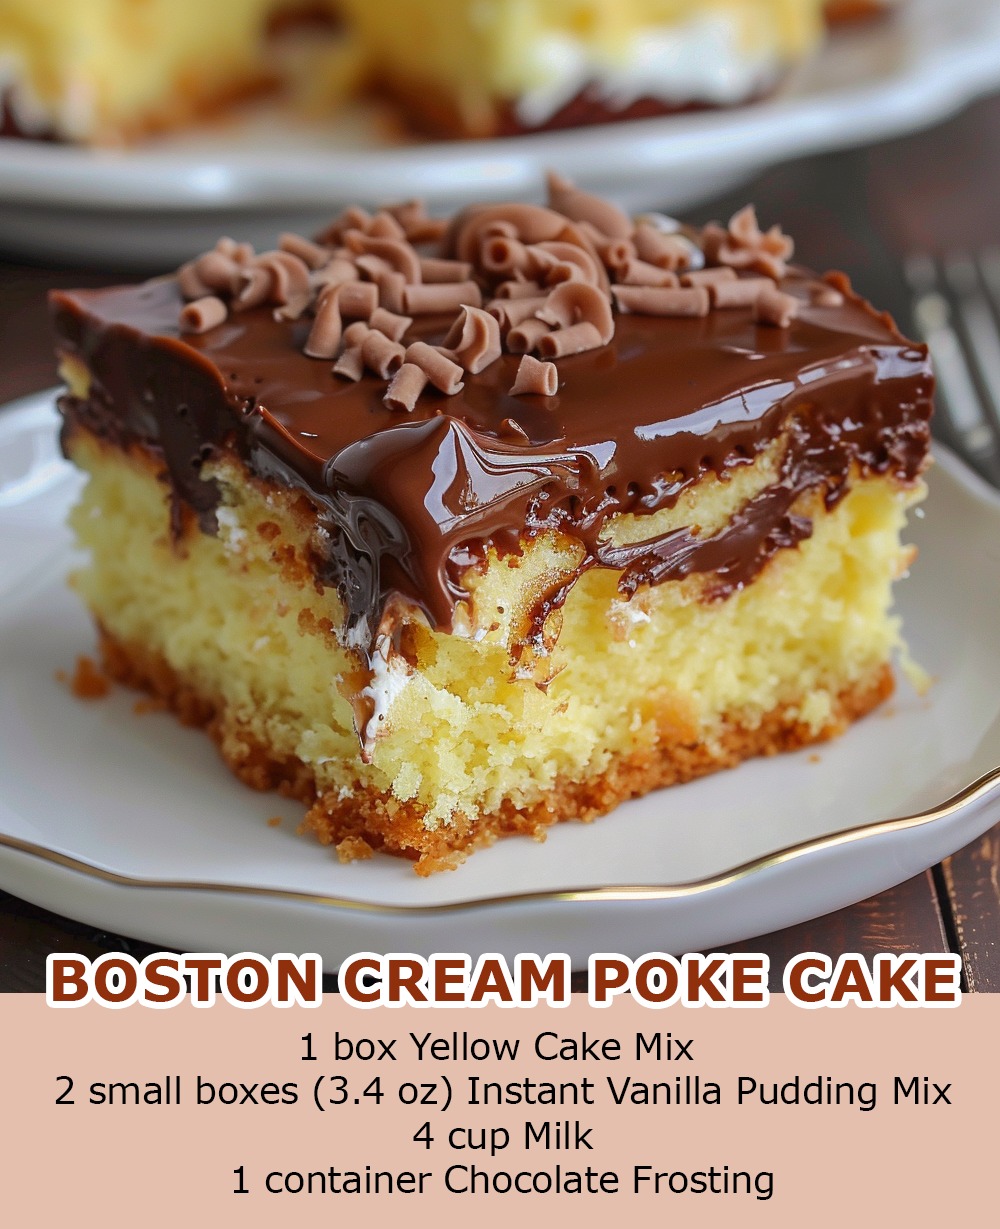 BOSTON CREAM POKE CAKE